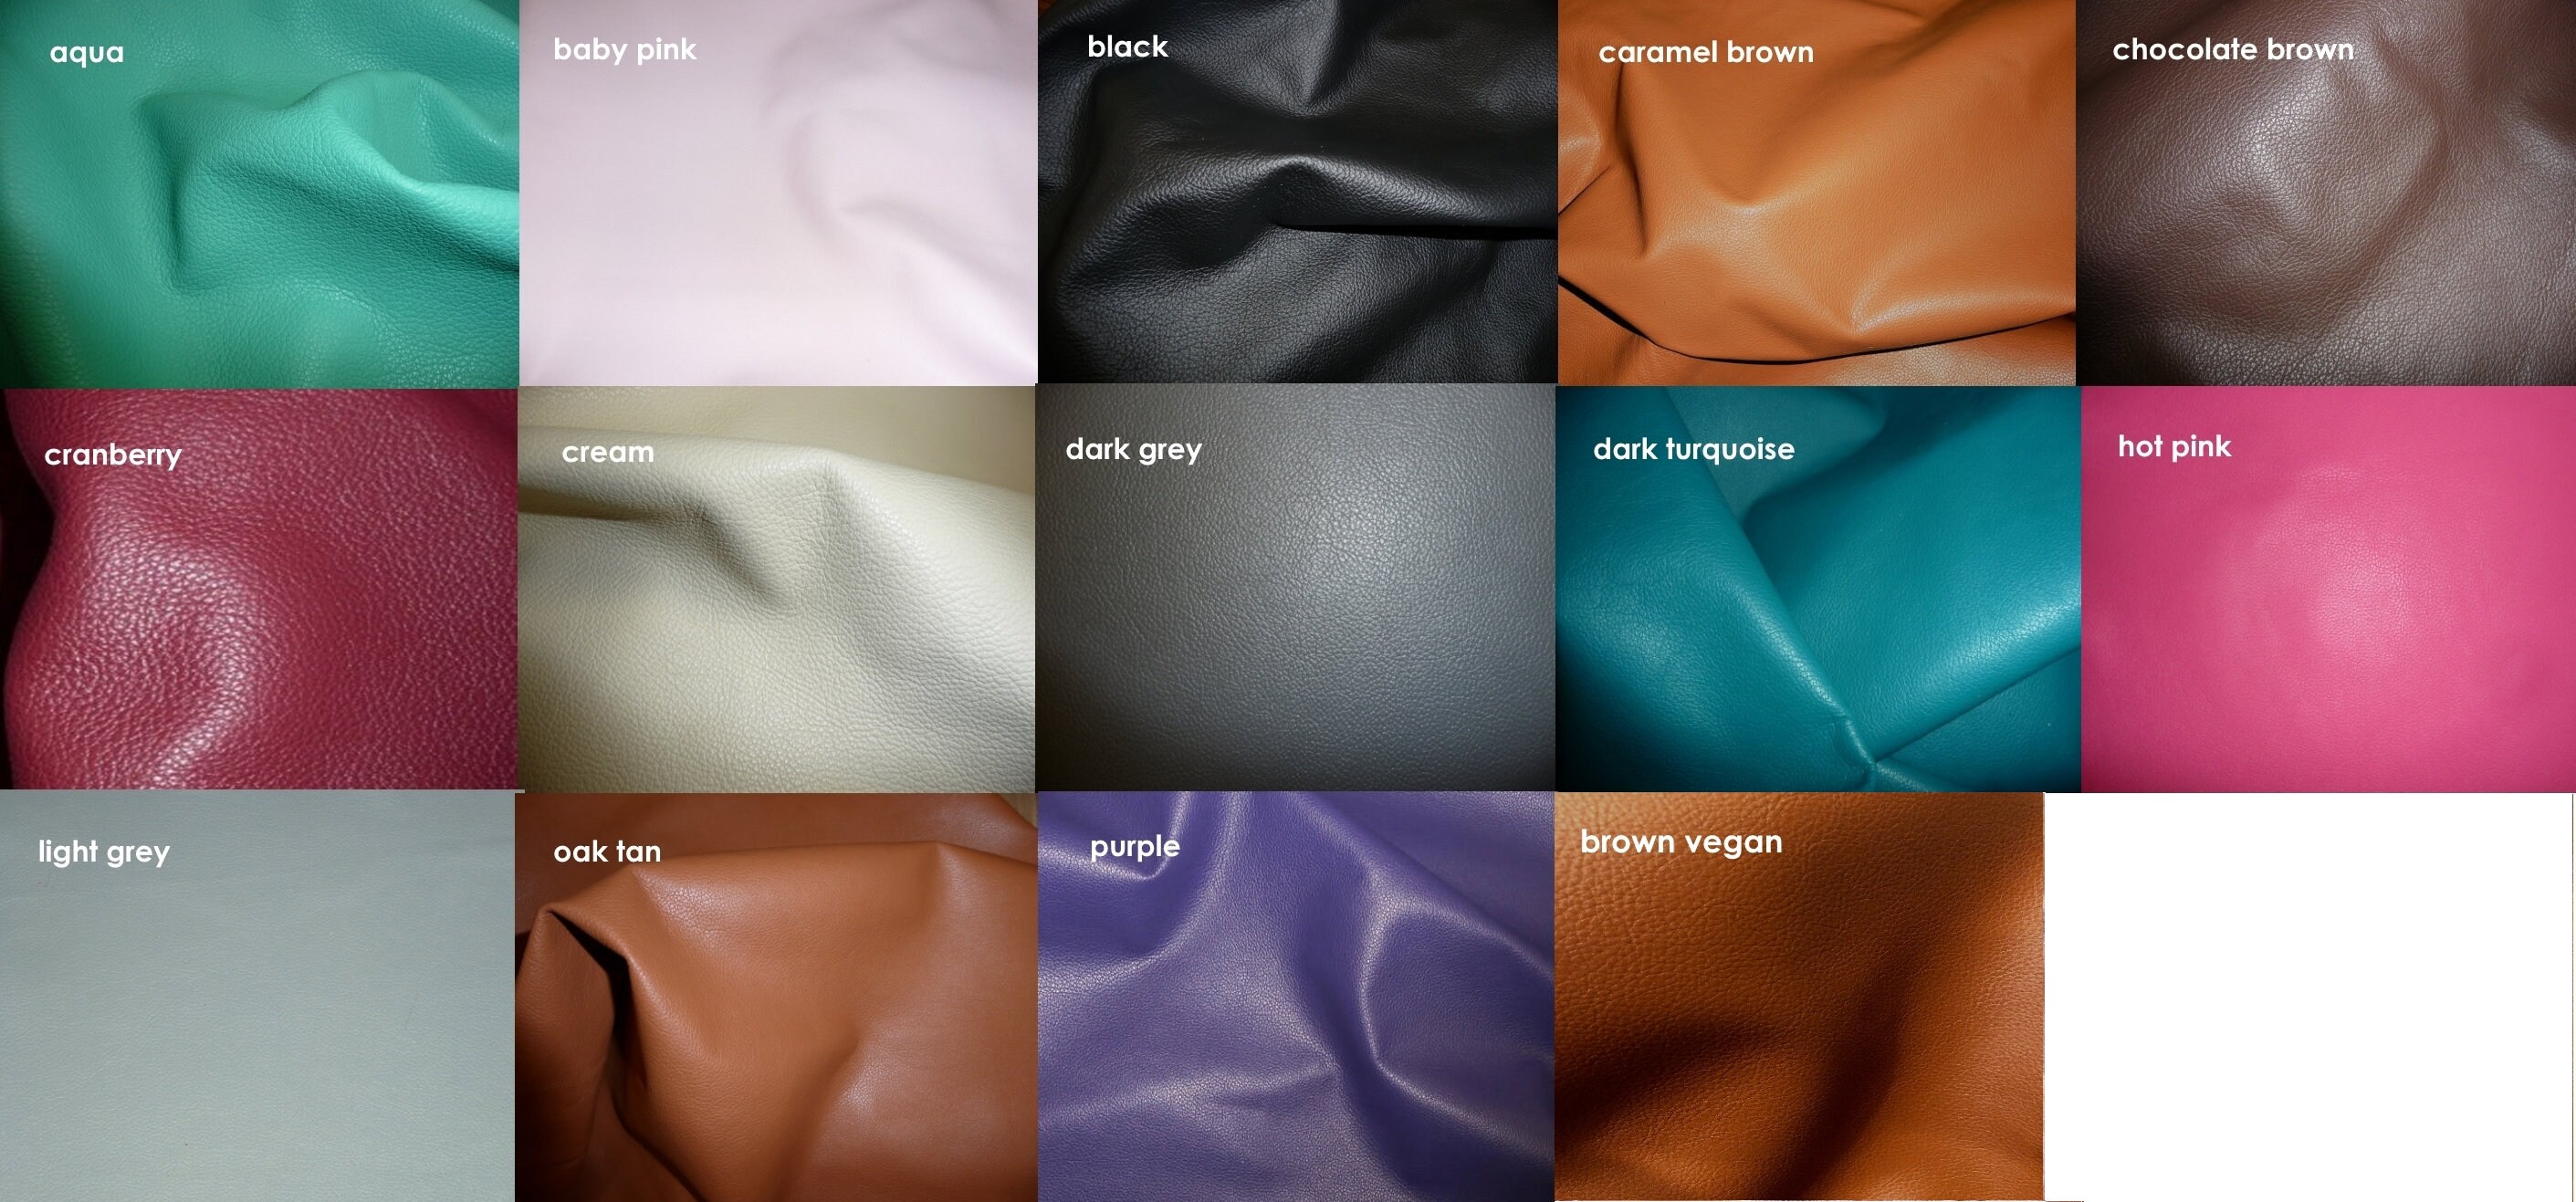 Skottsberg Leather Handle Covers 2 Pieces Accessories